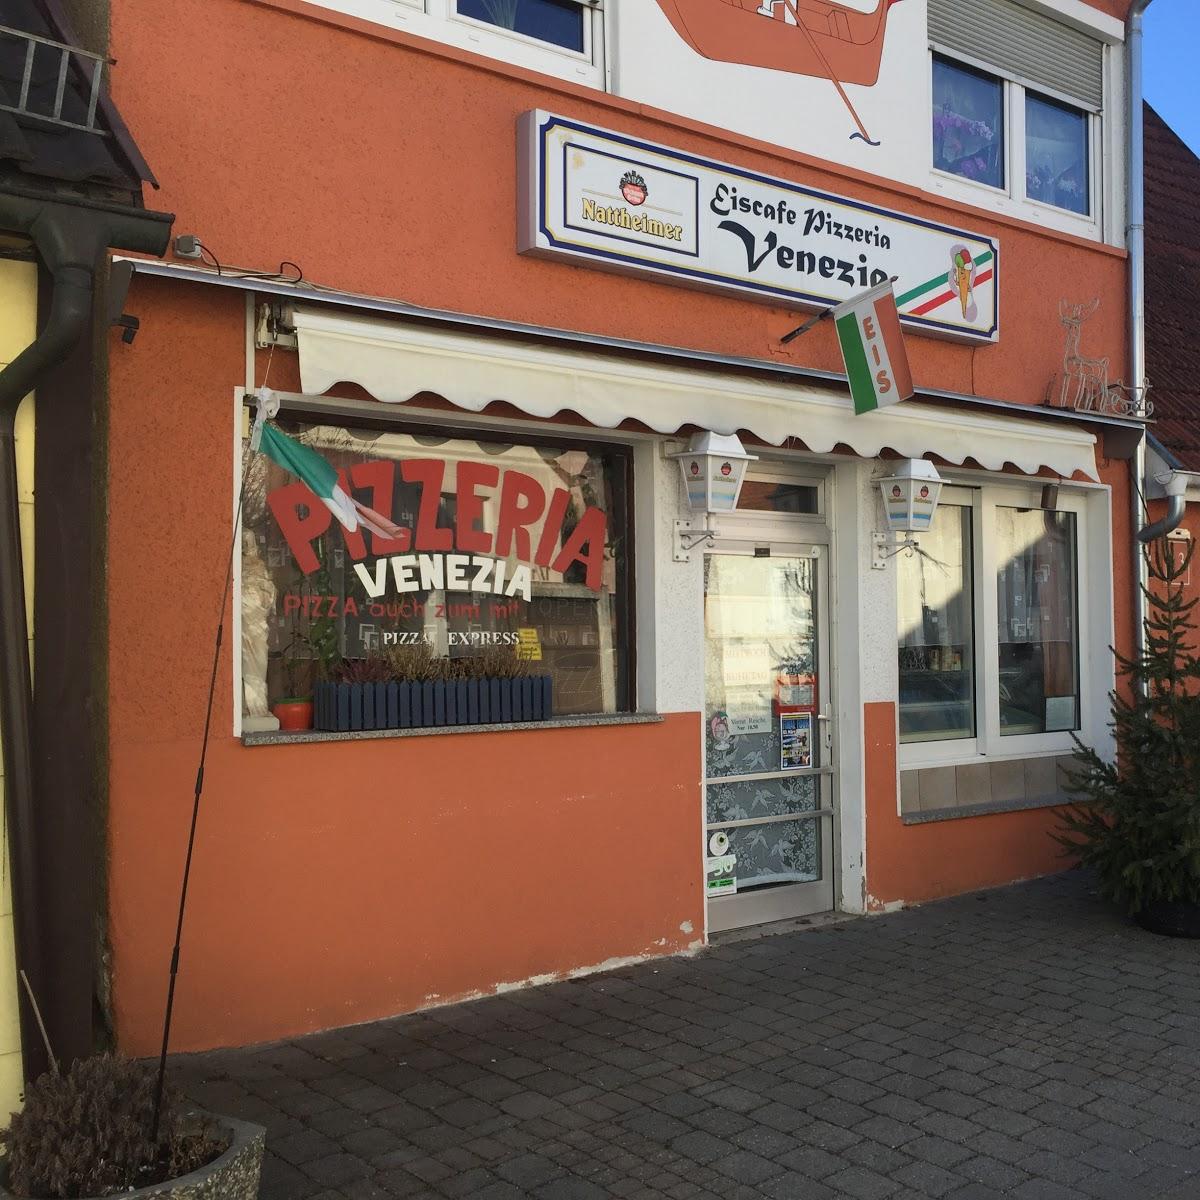 Restaurant "Pizzeria Venezia" in Heidenheim an der Brenz